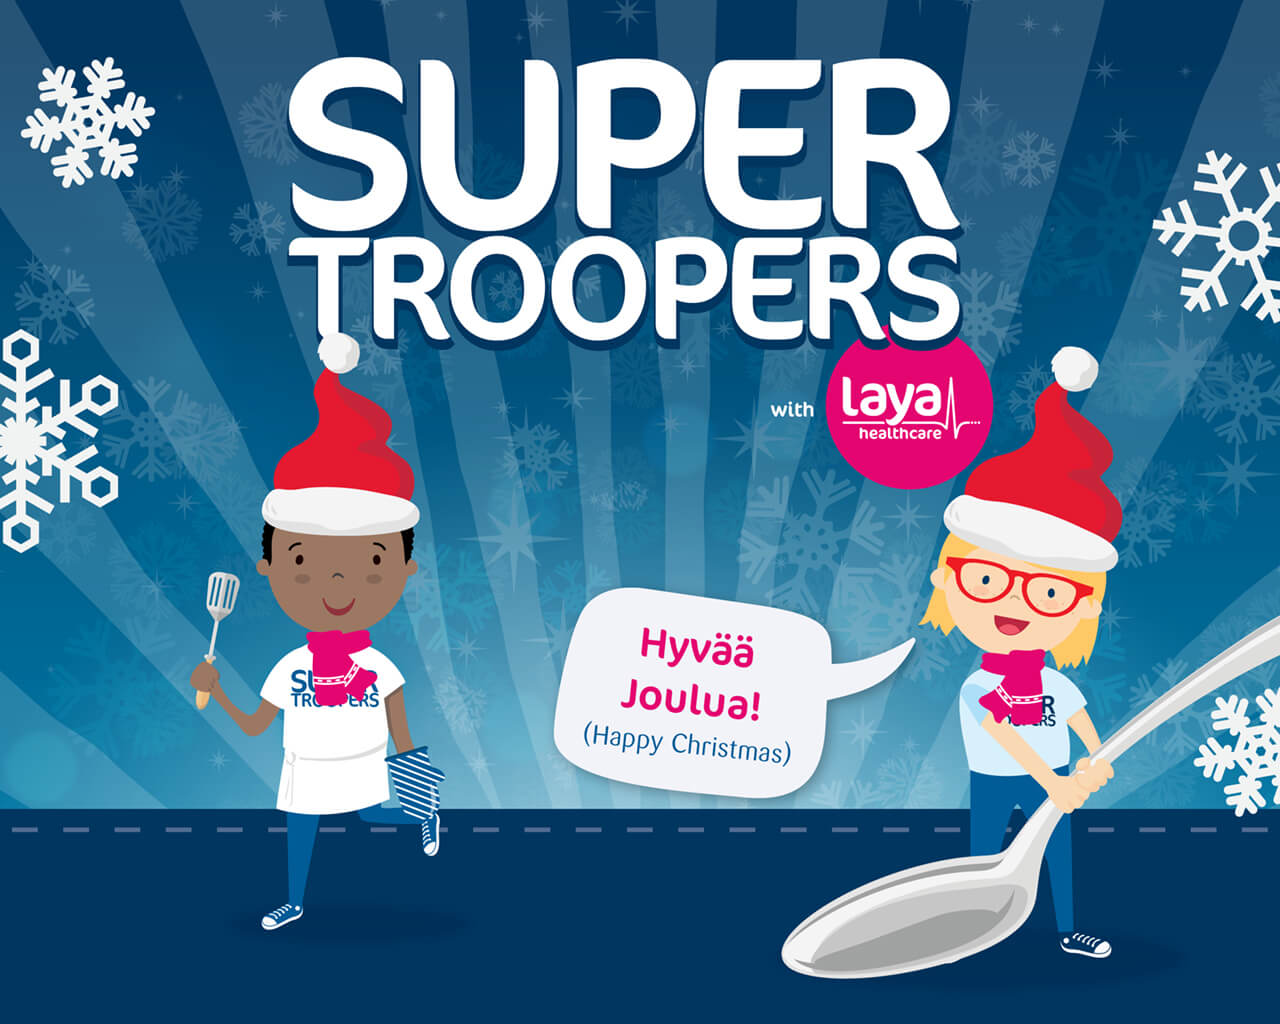 Super Troopers Christmas Cartoon Image